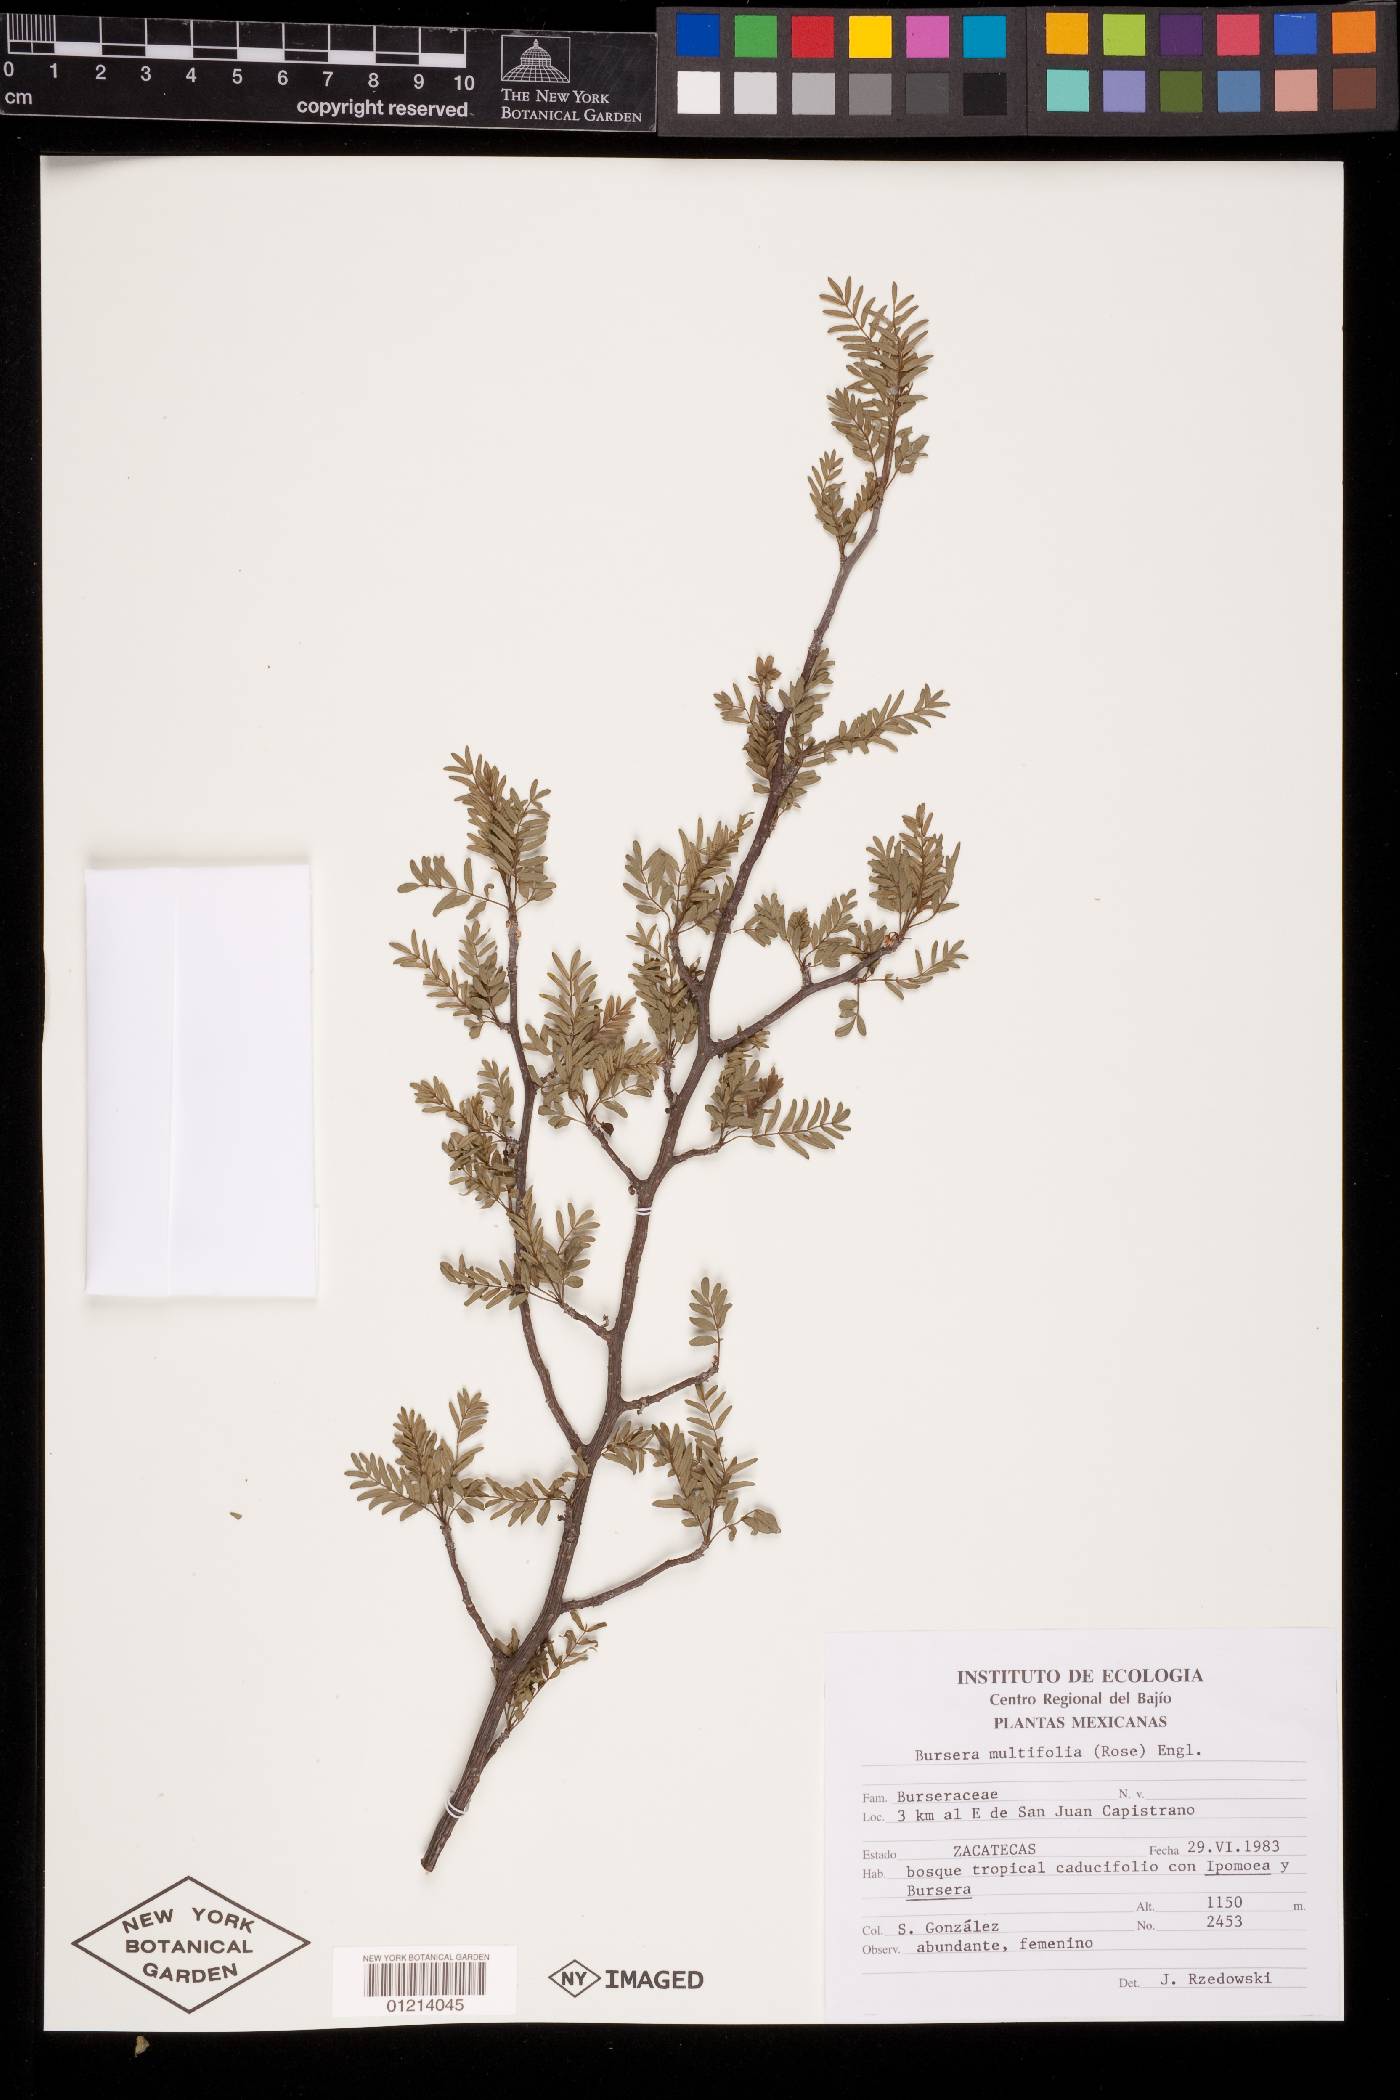 Bursera multifolia image